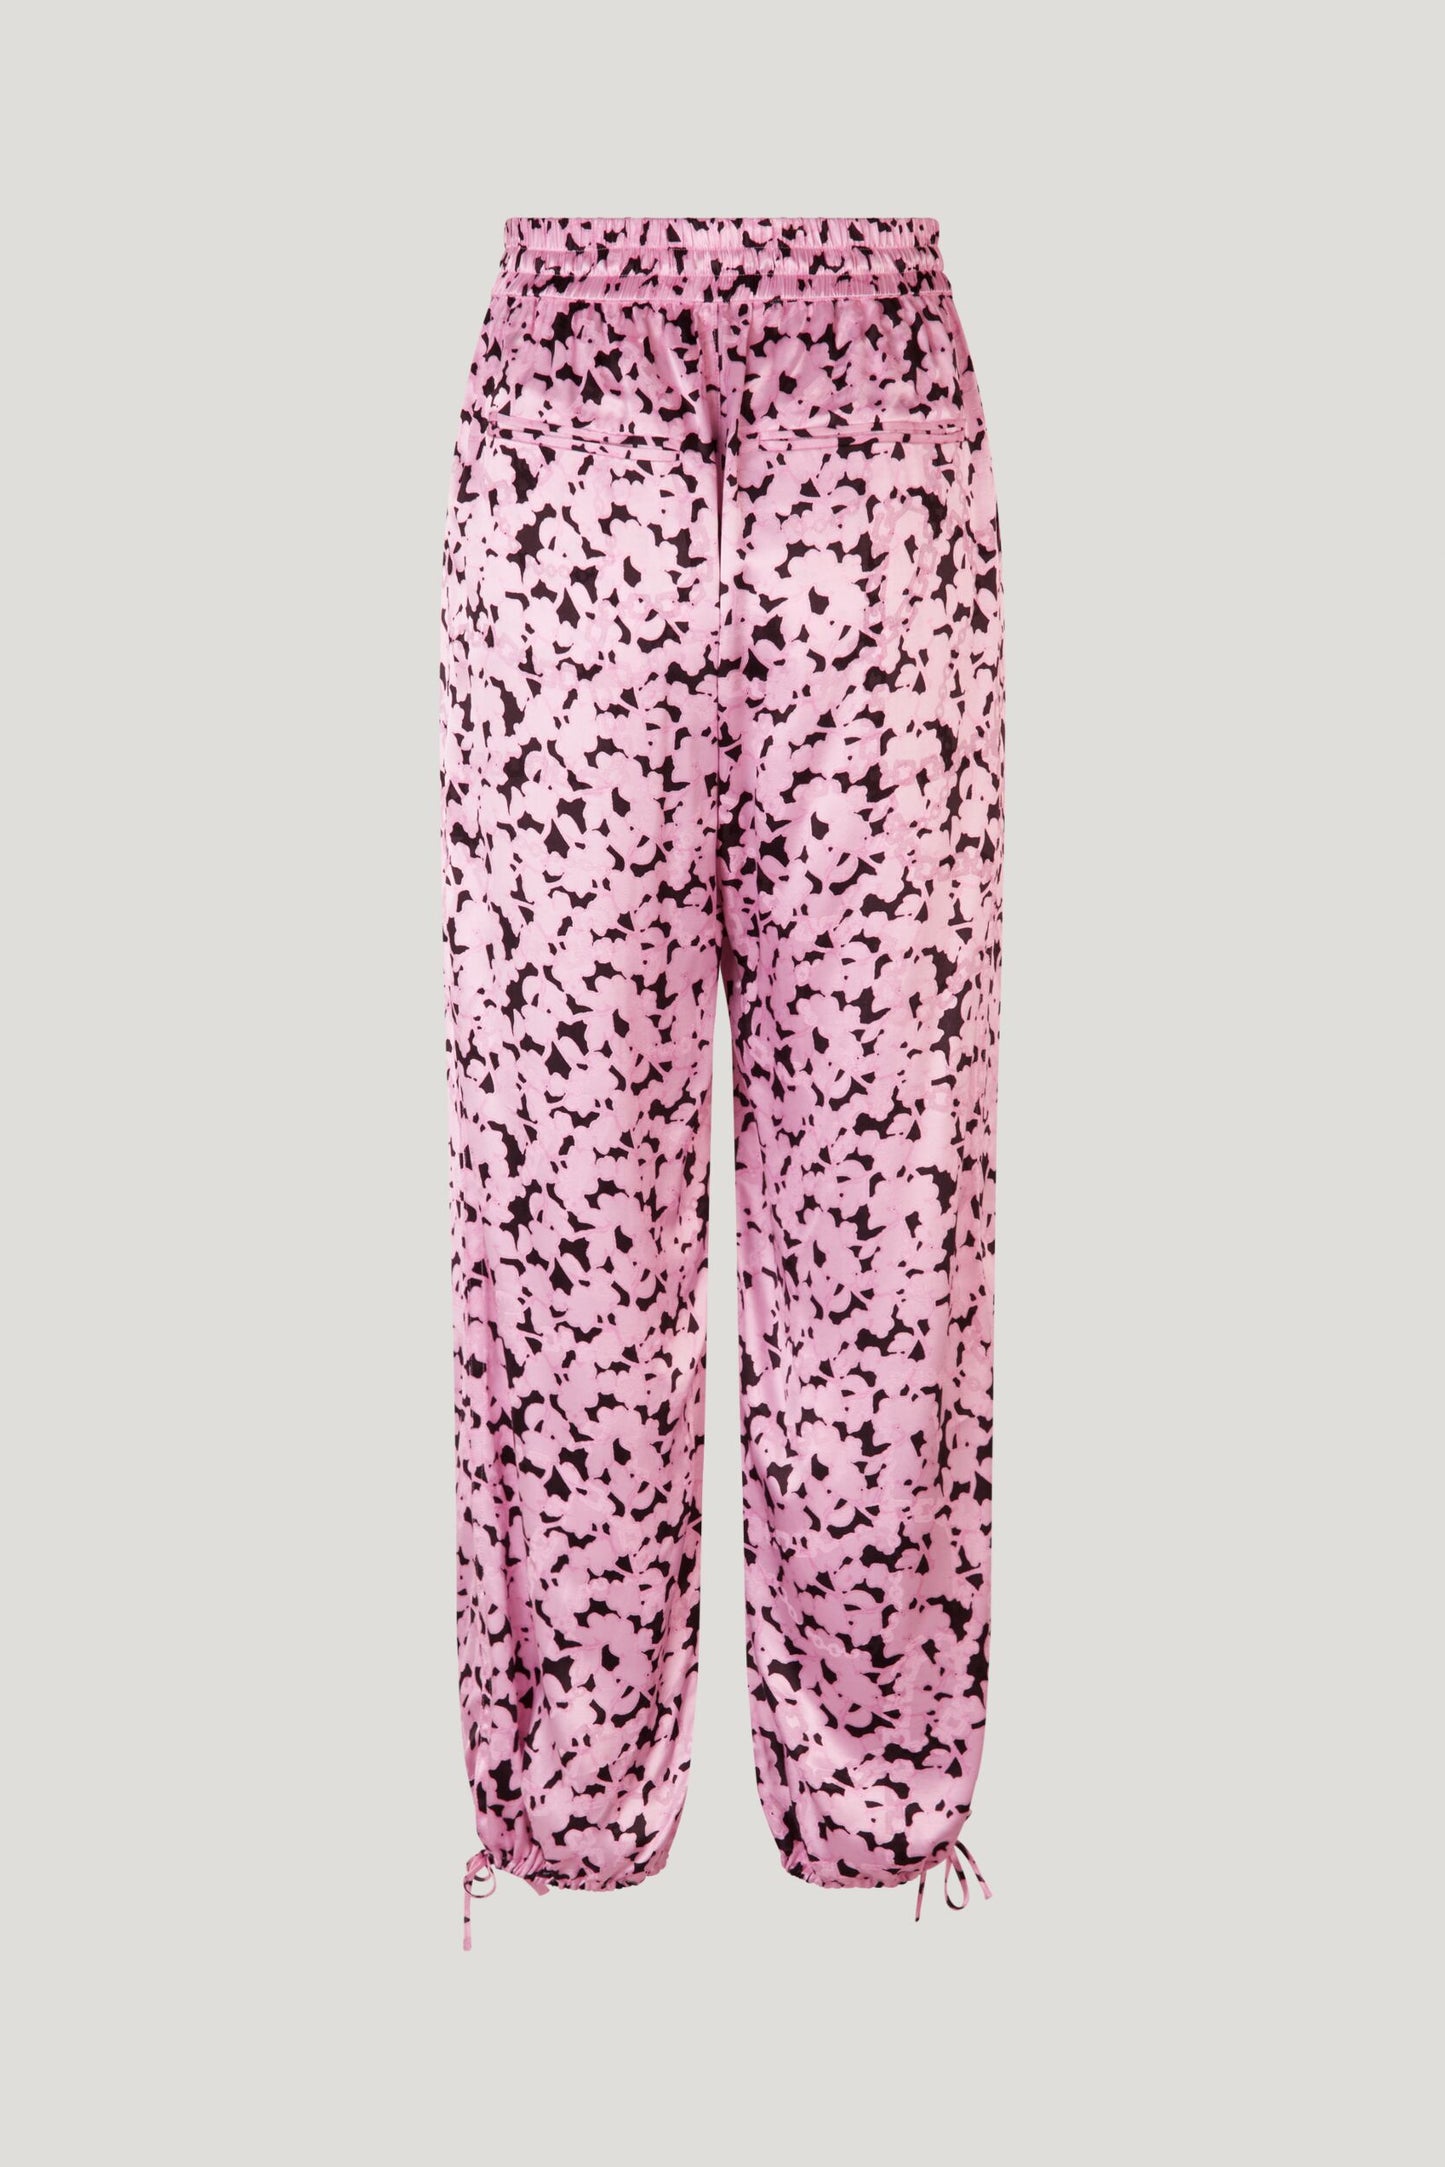 Nipa Trousers - Pink Pirouette by Baum und Pferdgarten